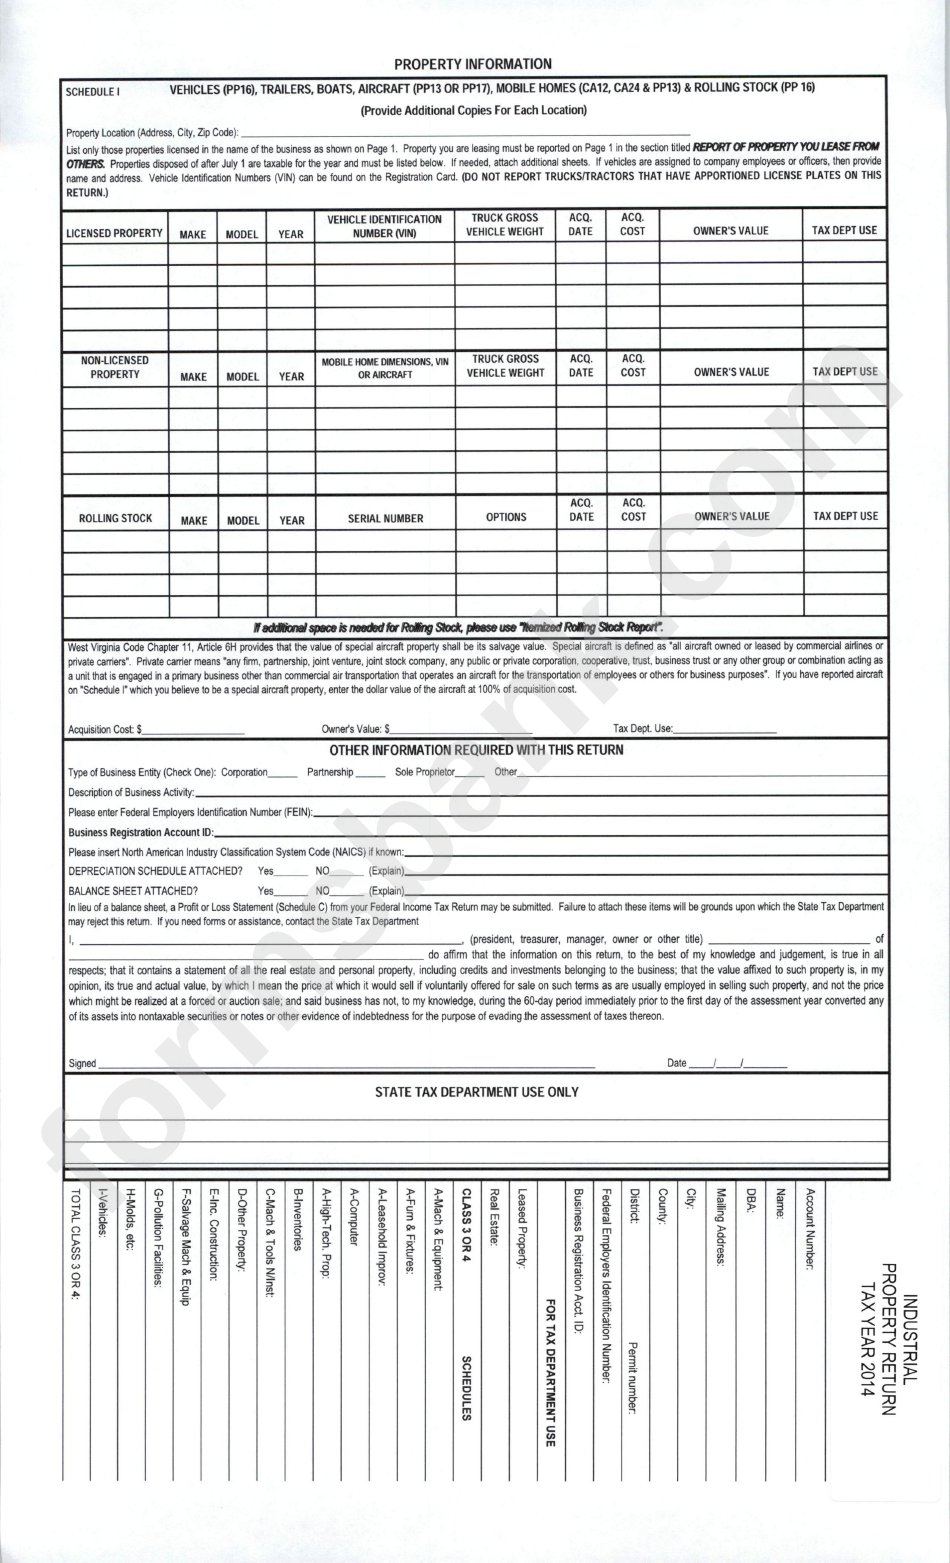 Form Stc 12:32l - Industrial Business Property Return 2013